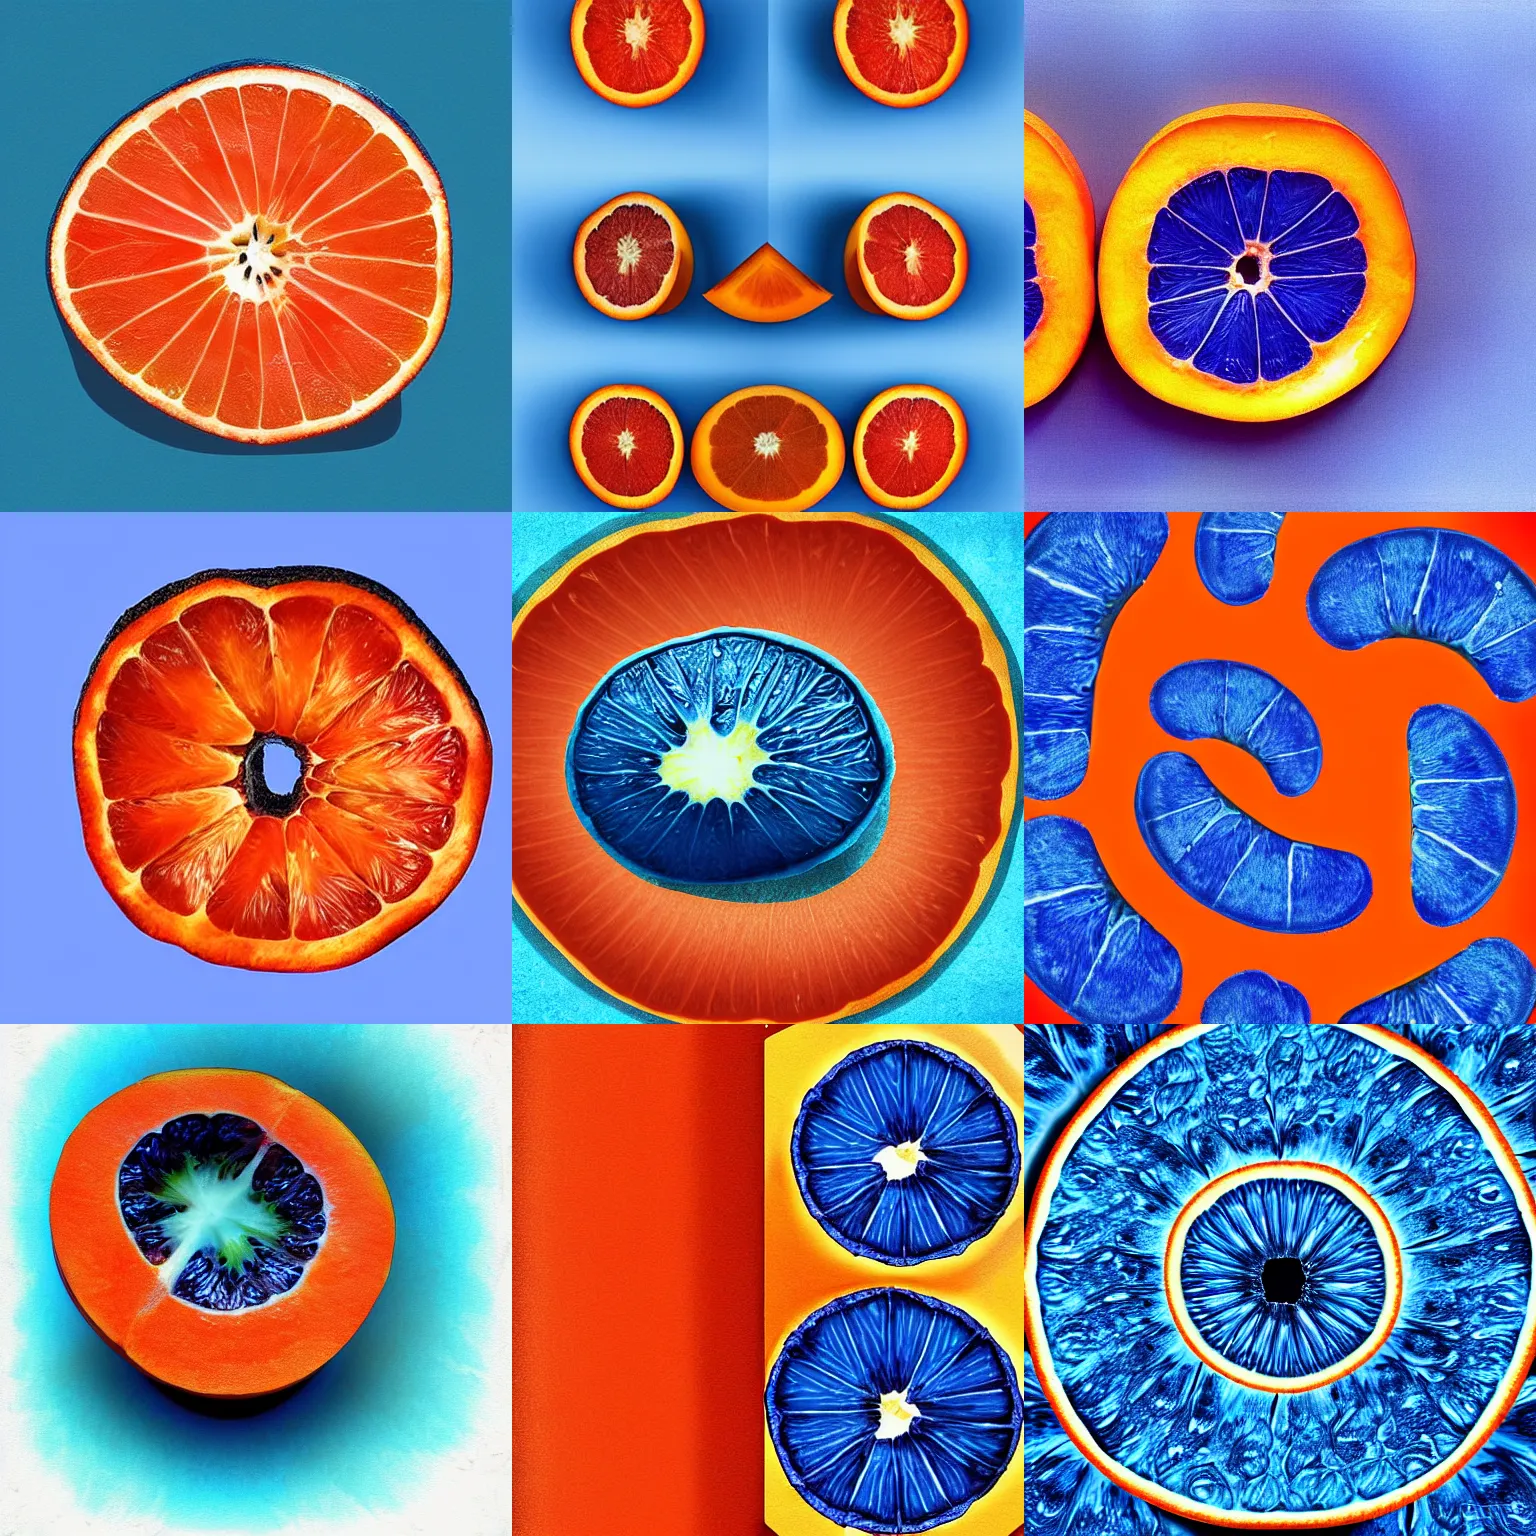 Prompt: A beautiful blue orange sliced in half with juicy flesh, digital art